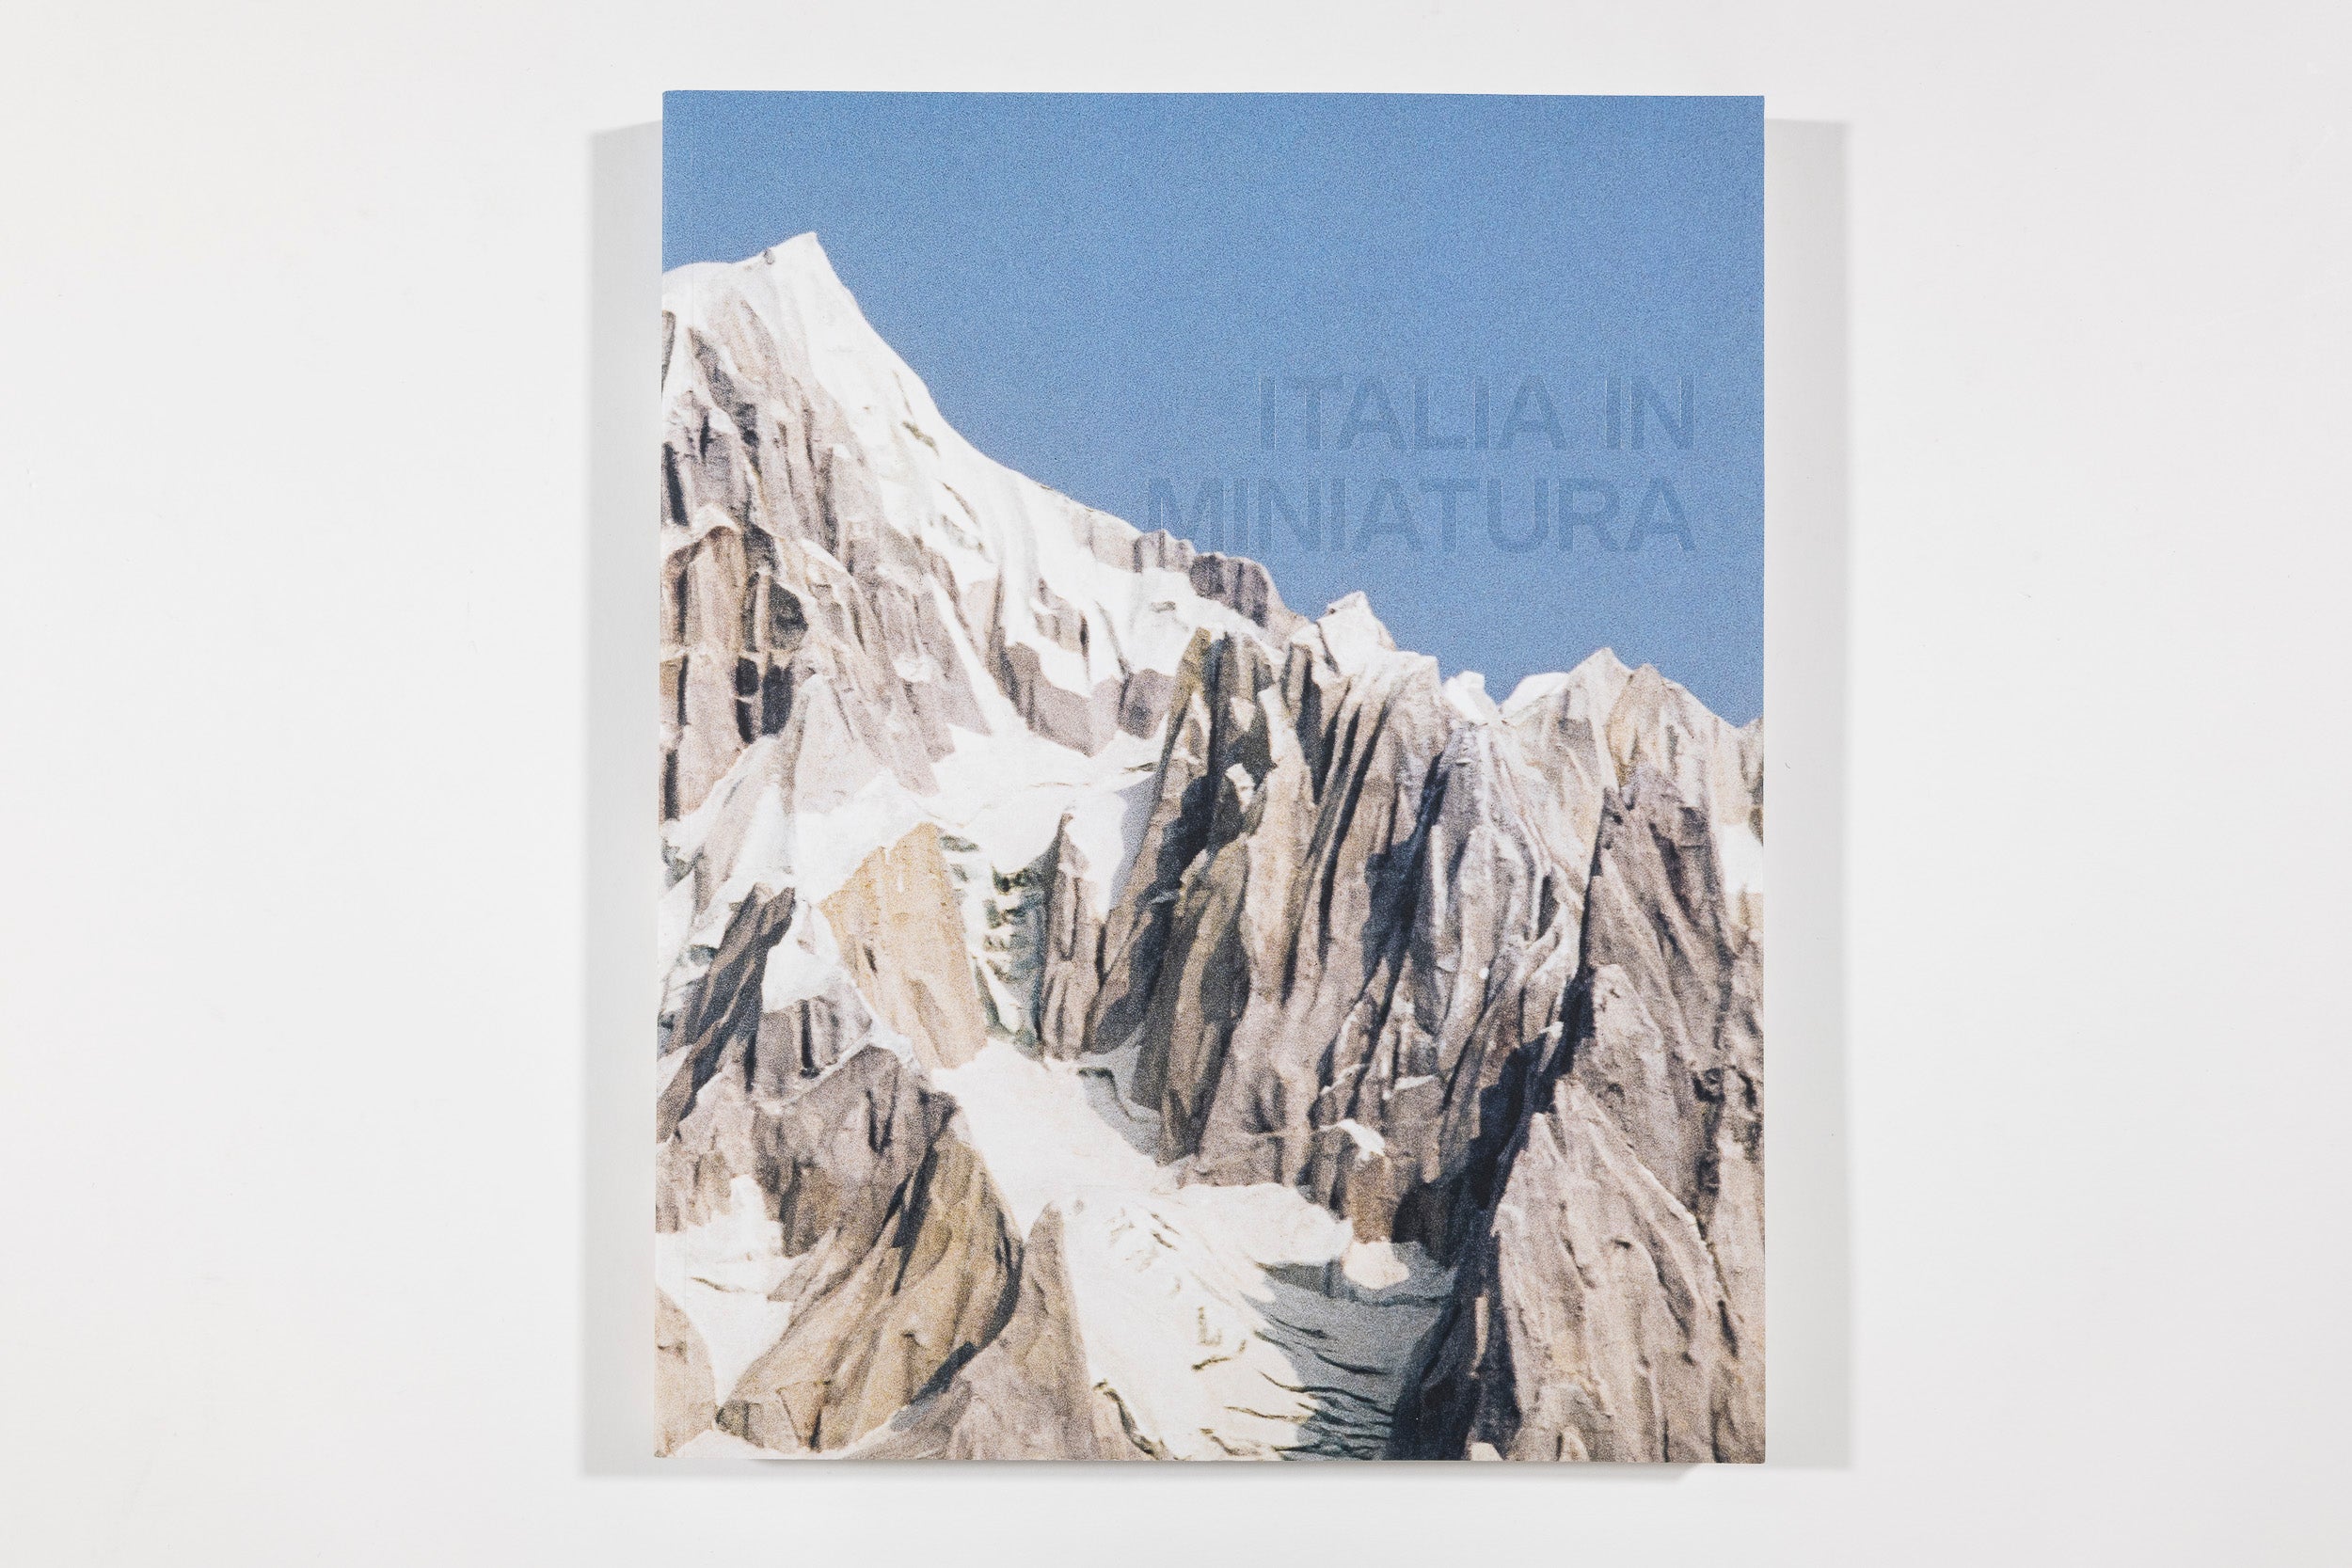 Italia in Miniatura - Luigi Ghirri & Ivo Rambaldi